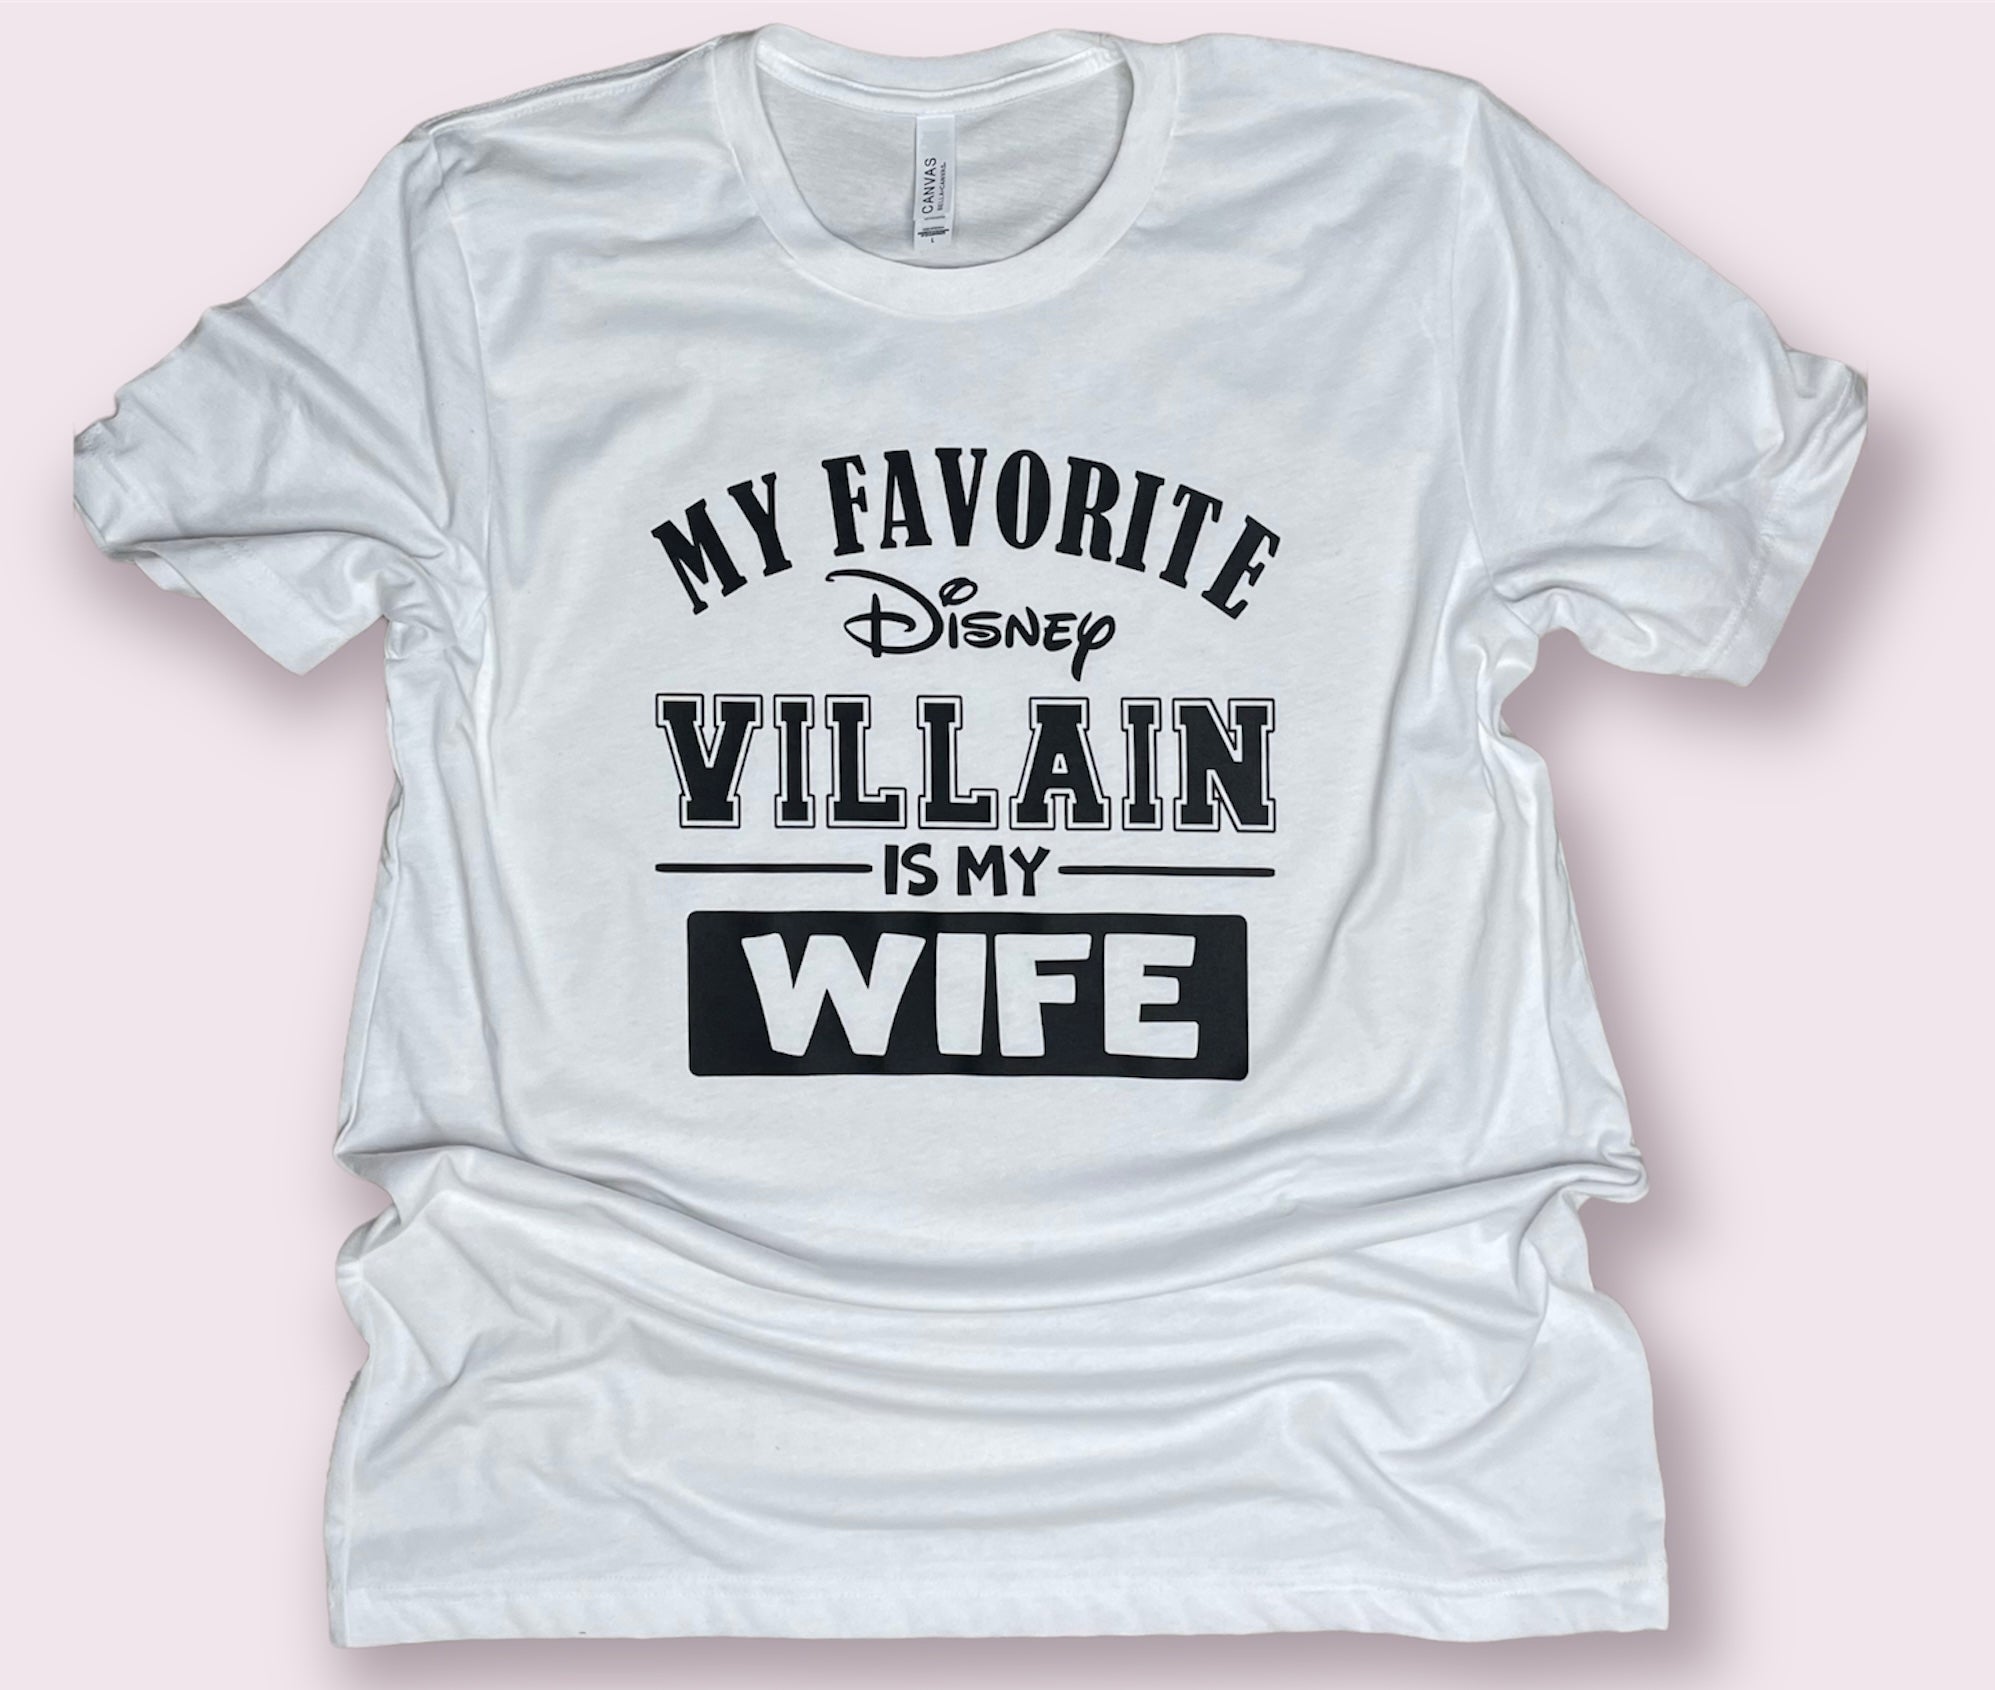 My Favorite Villain is My Wife Tee